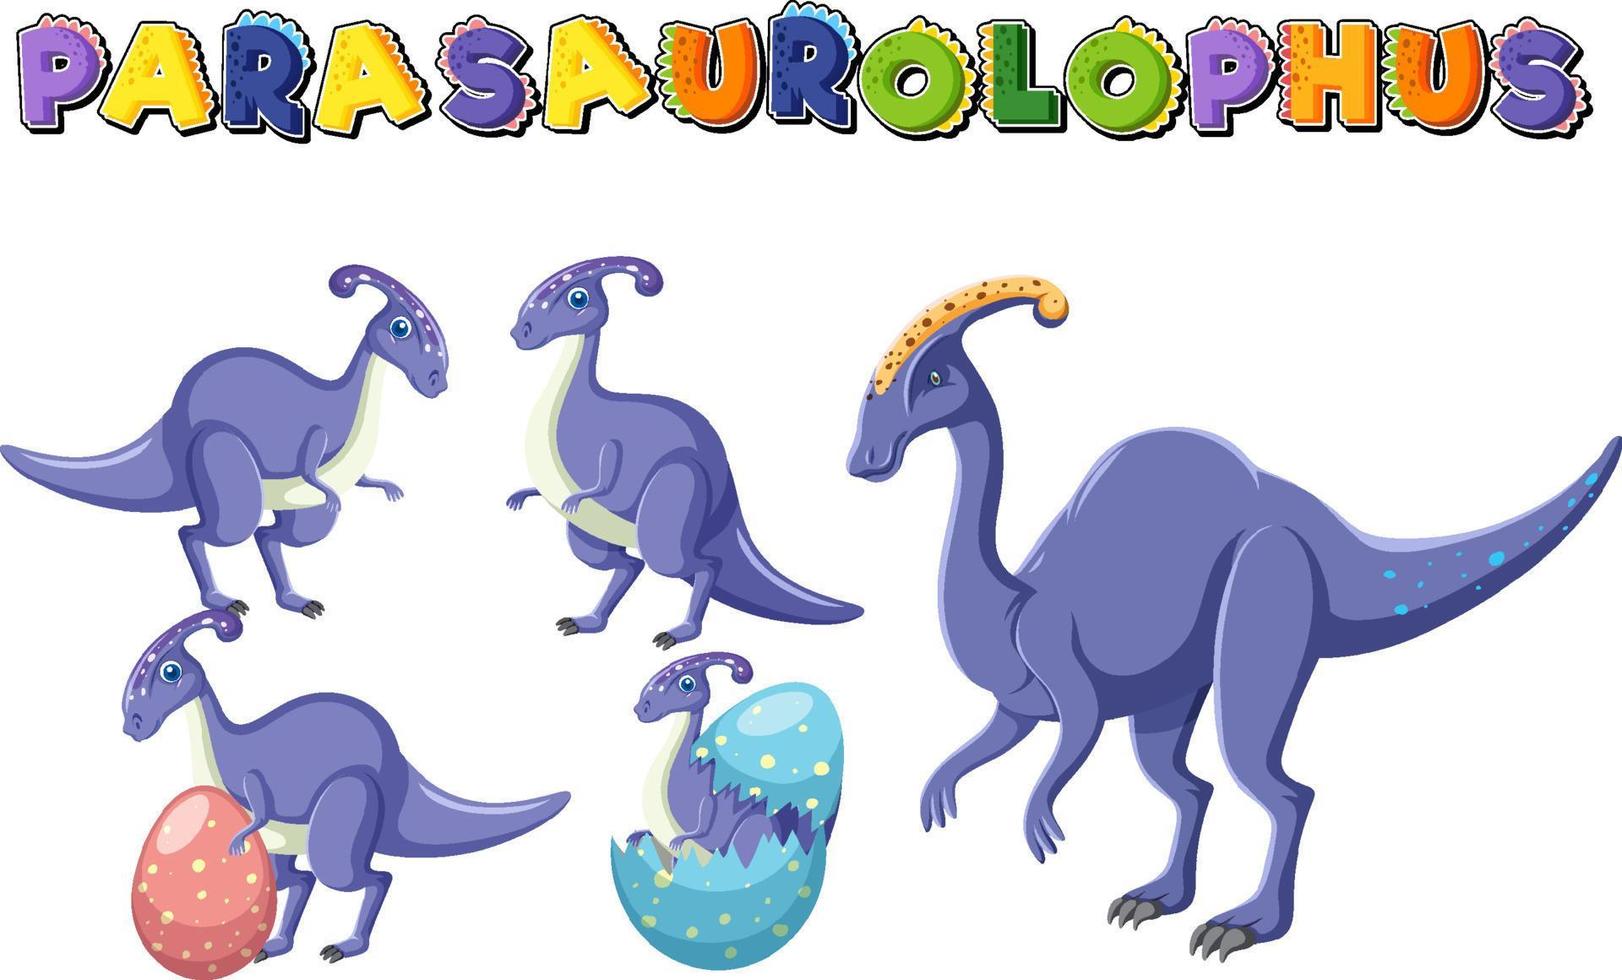 Parasaurolophus word logo with dinosaur cartoon character vector